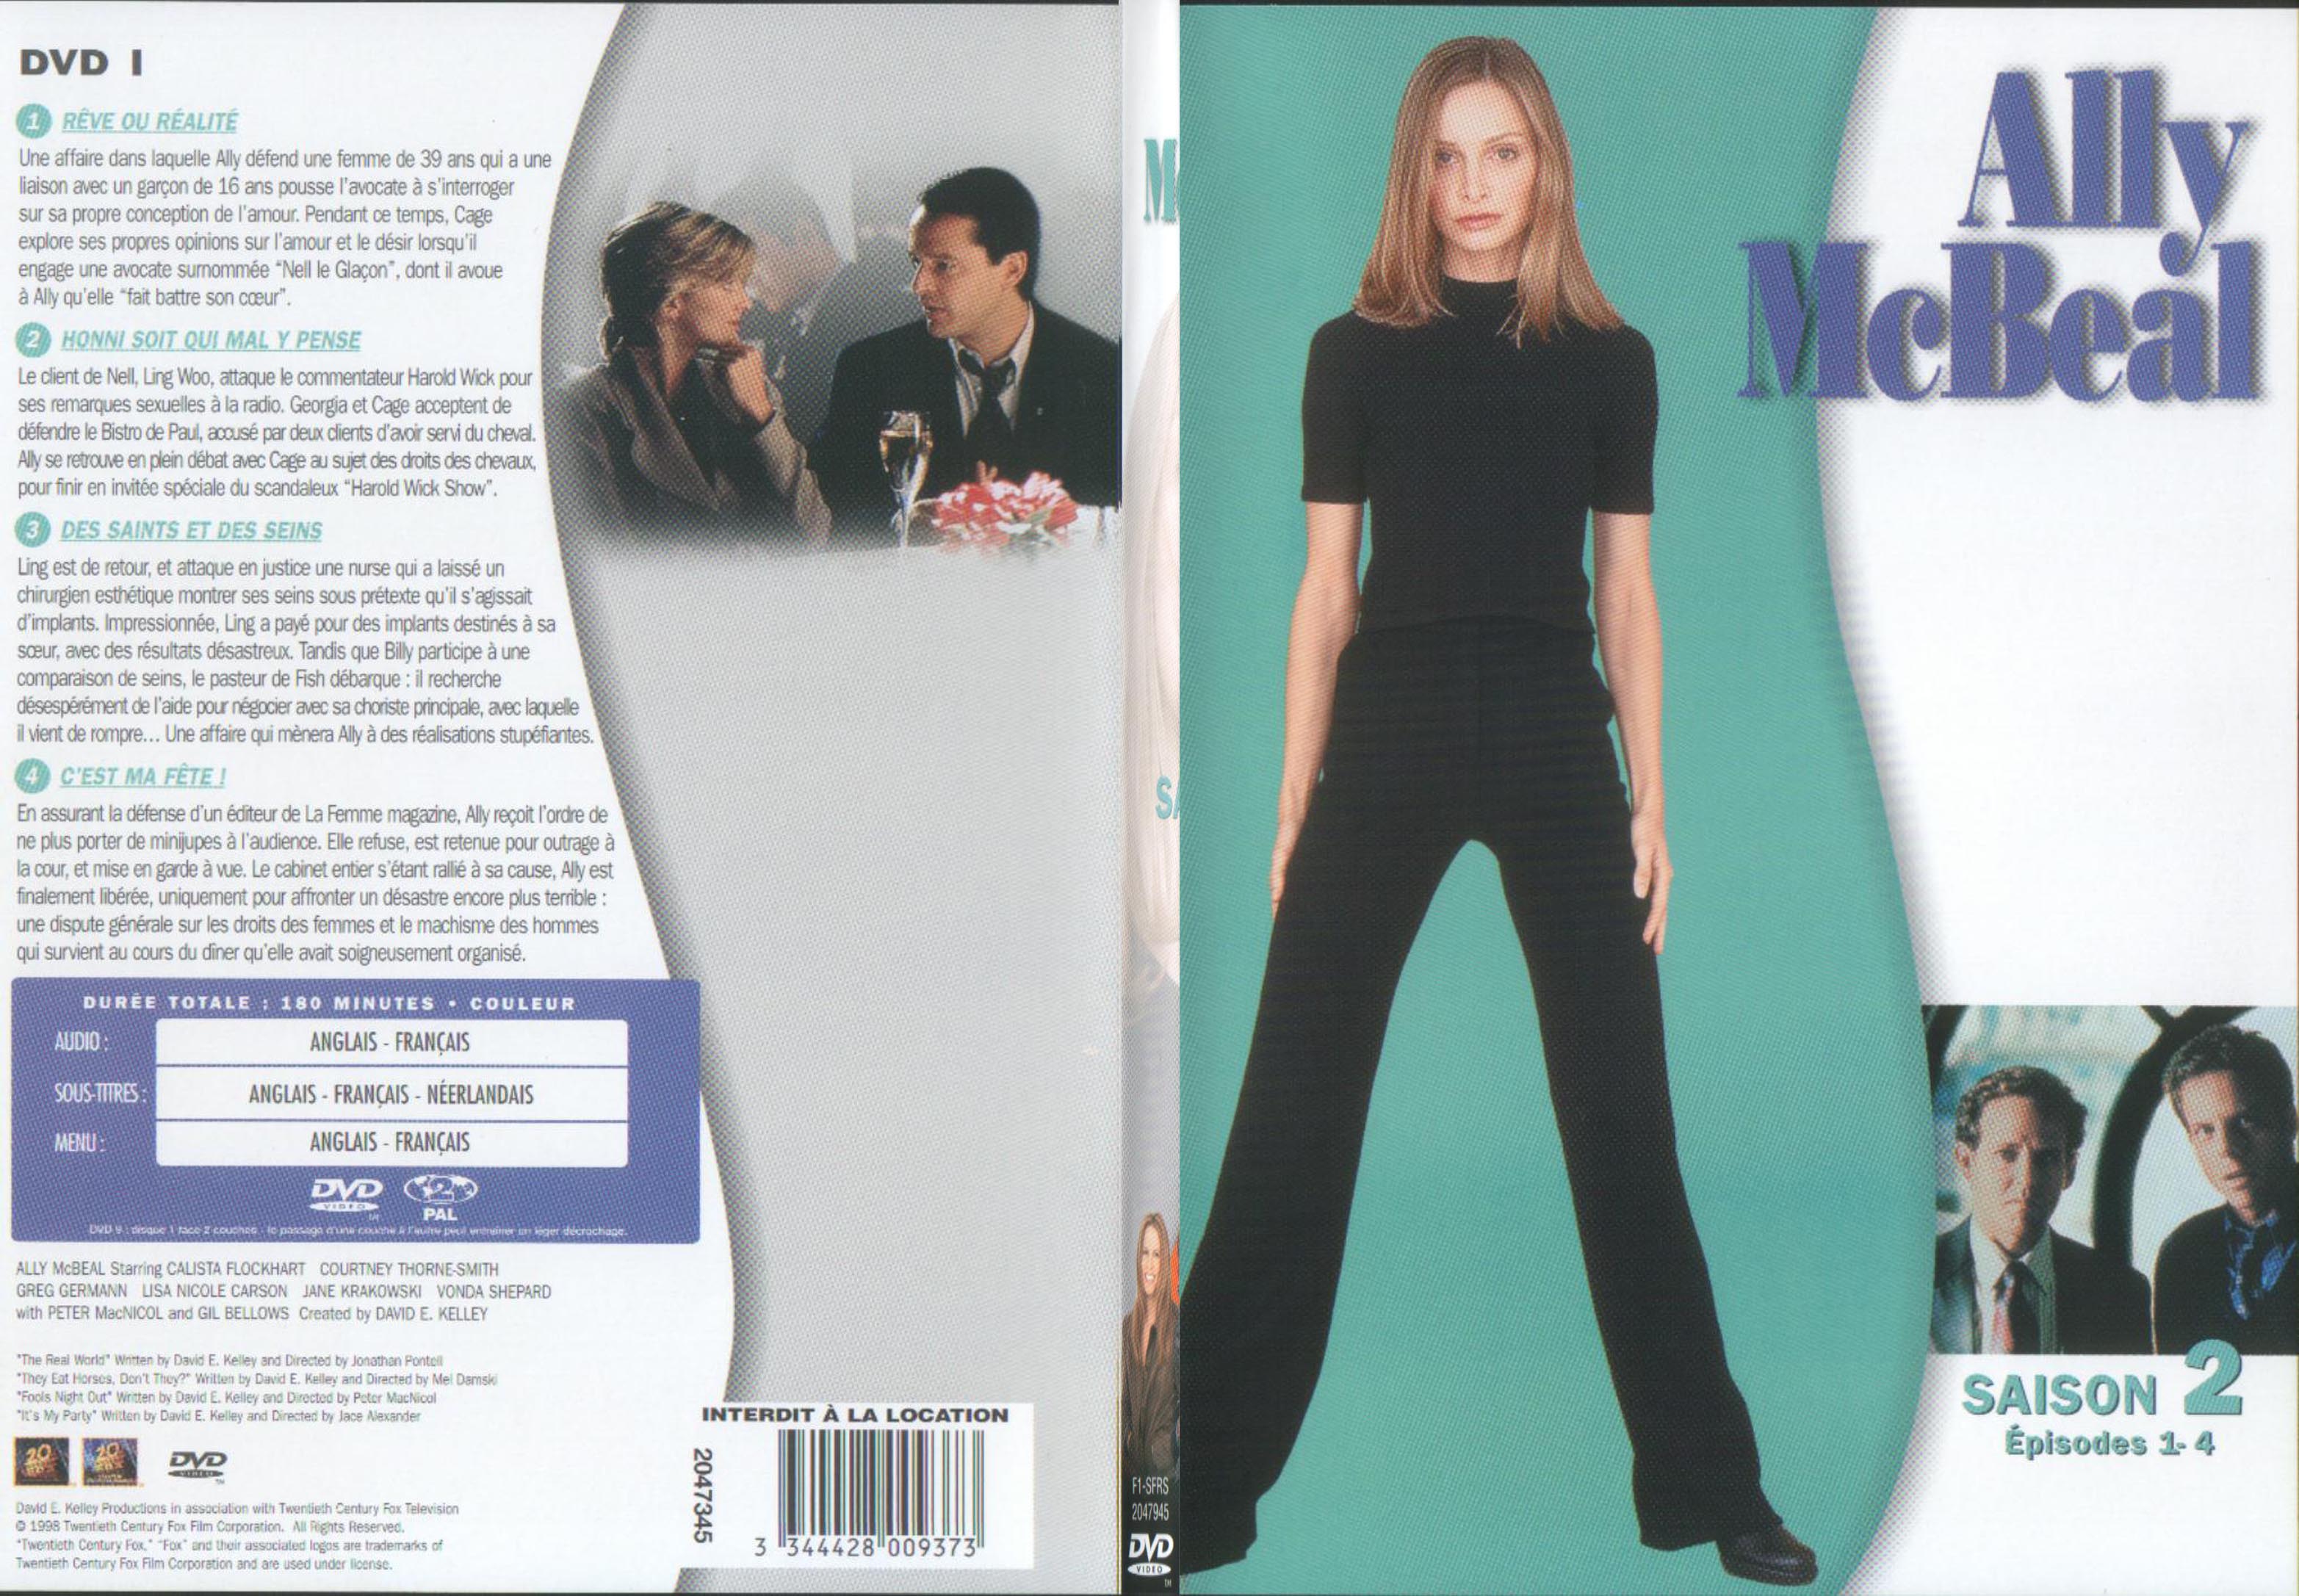 Jaquette DVD Ally McBeal saison 2 dvd 1 - SLIM